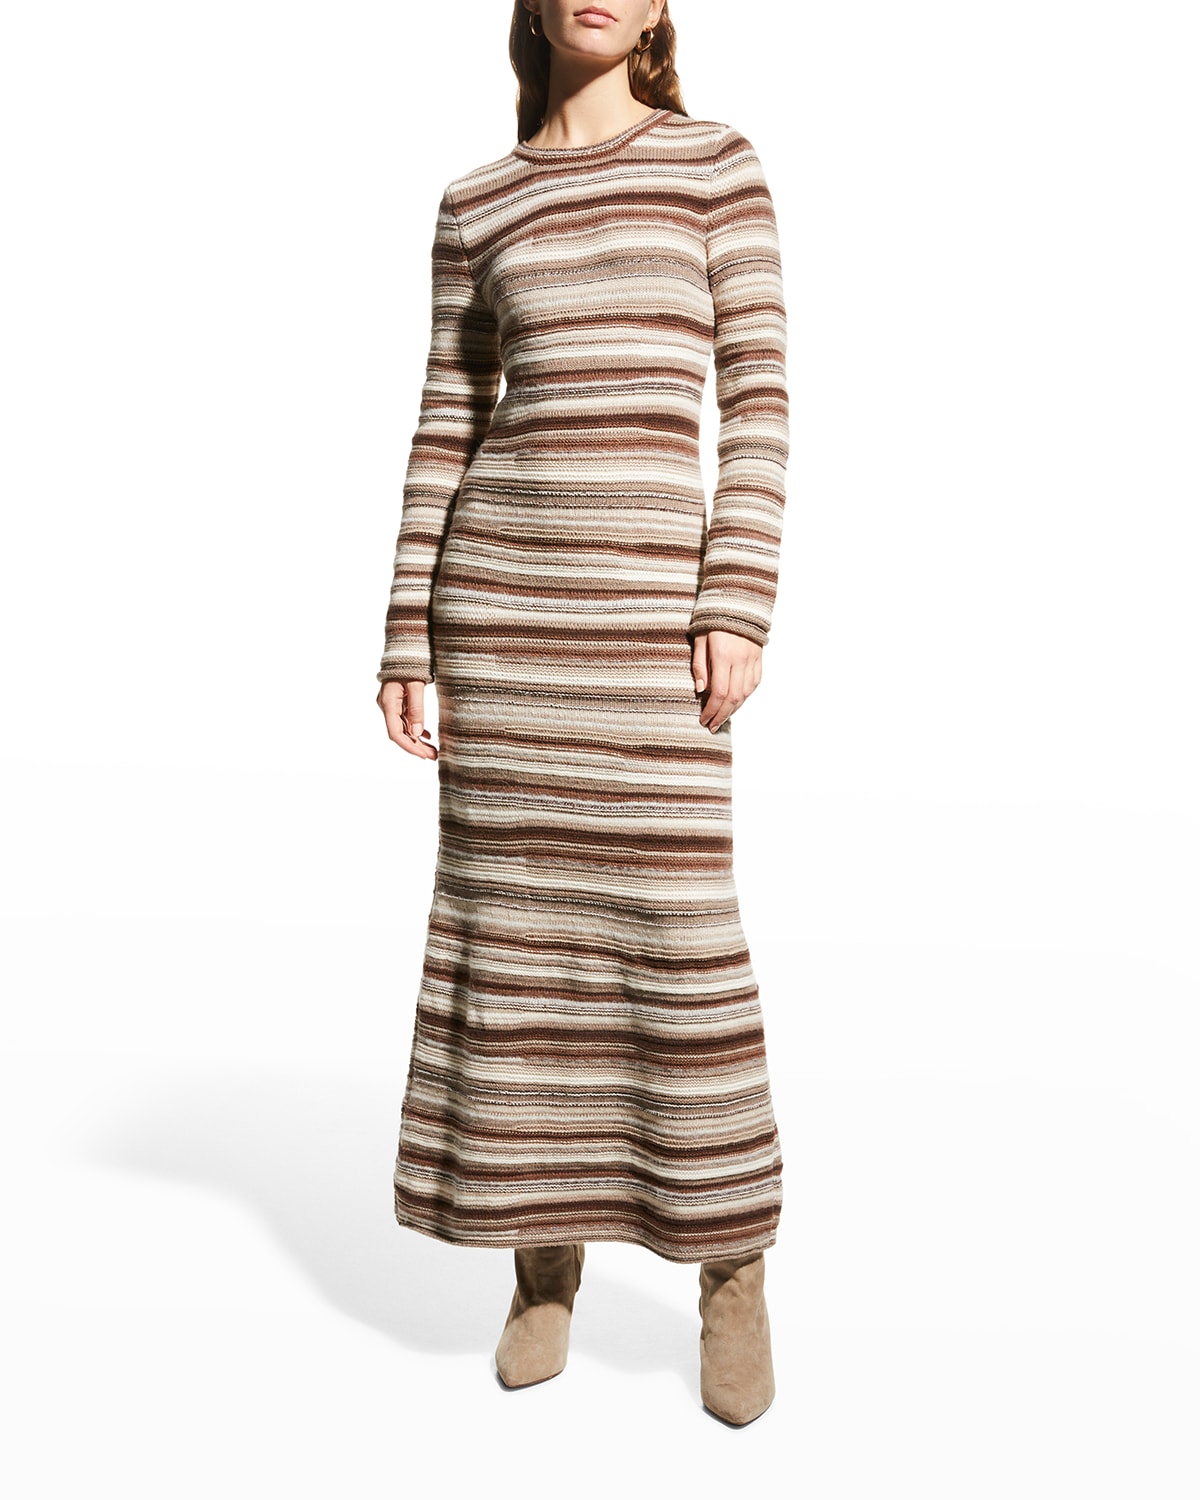 Chloe Striped Cashmere Midi Dress